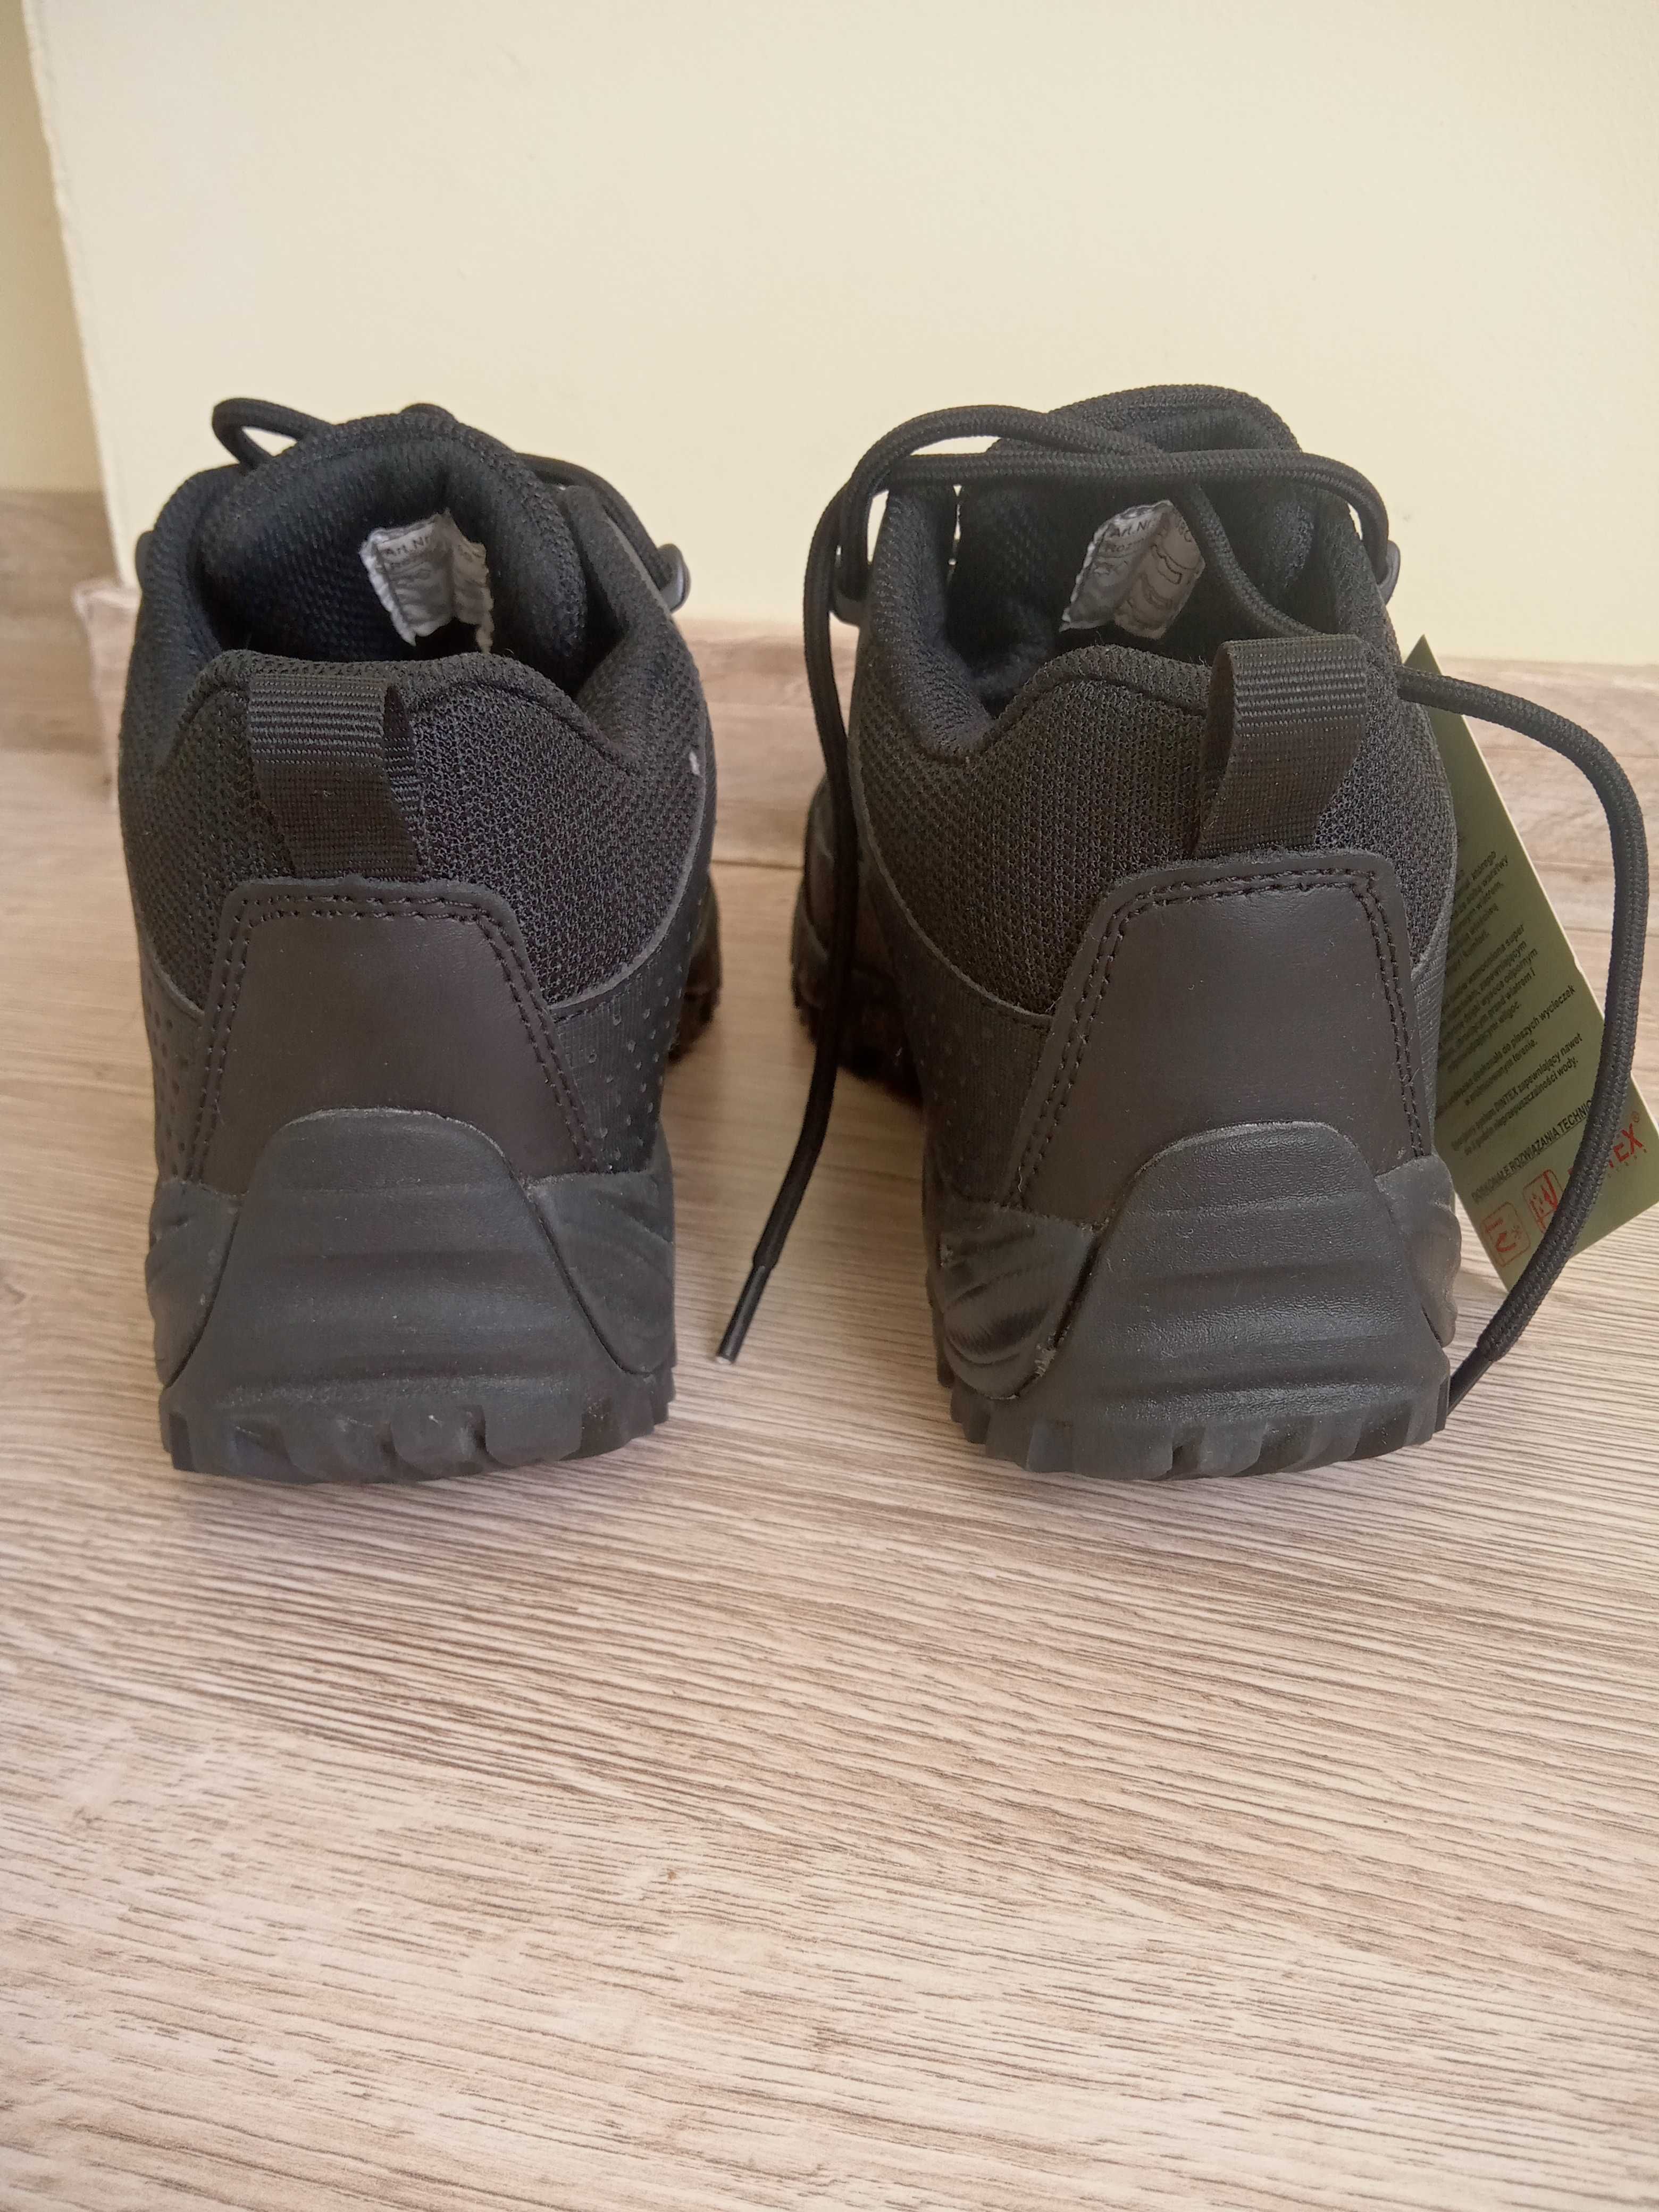 Nowe buty trekkingowe Vemont wodoodporne skóra rozm. 39